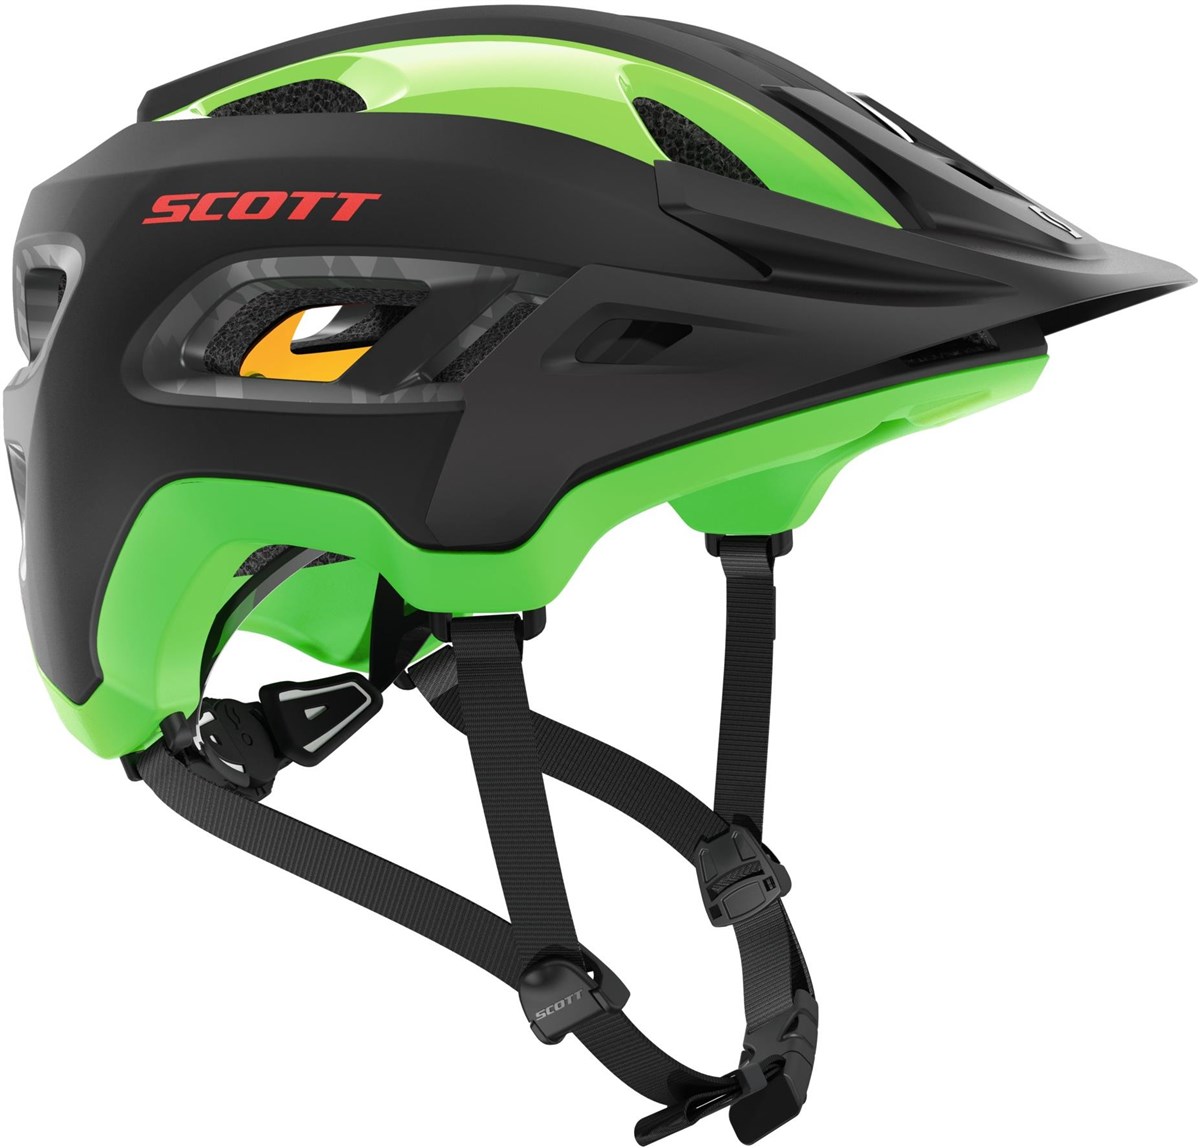 Scott Stego MTB Cycling Helmet product image